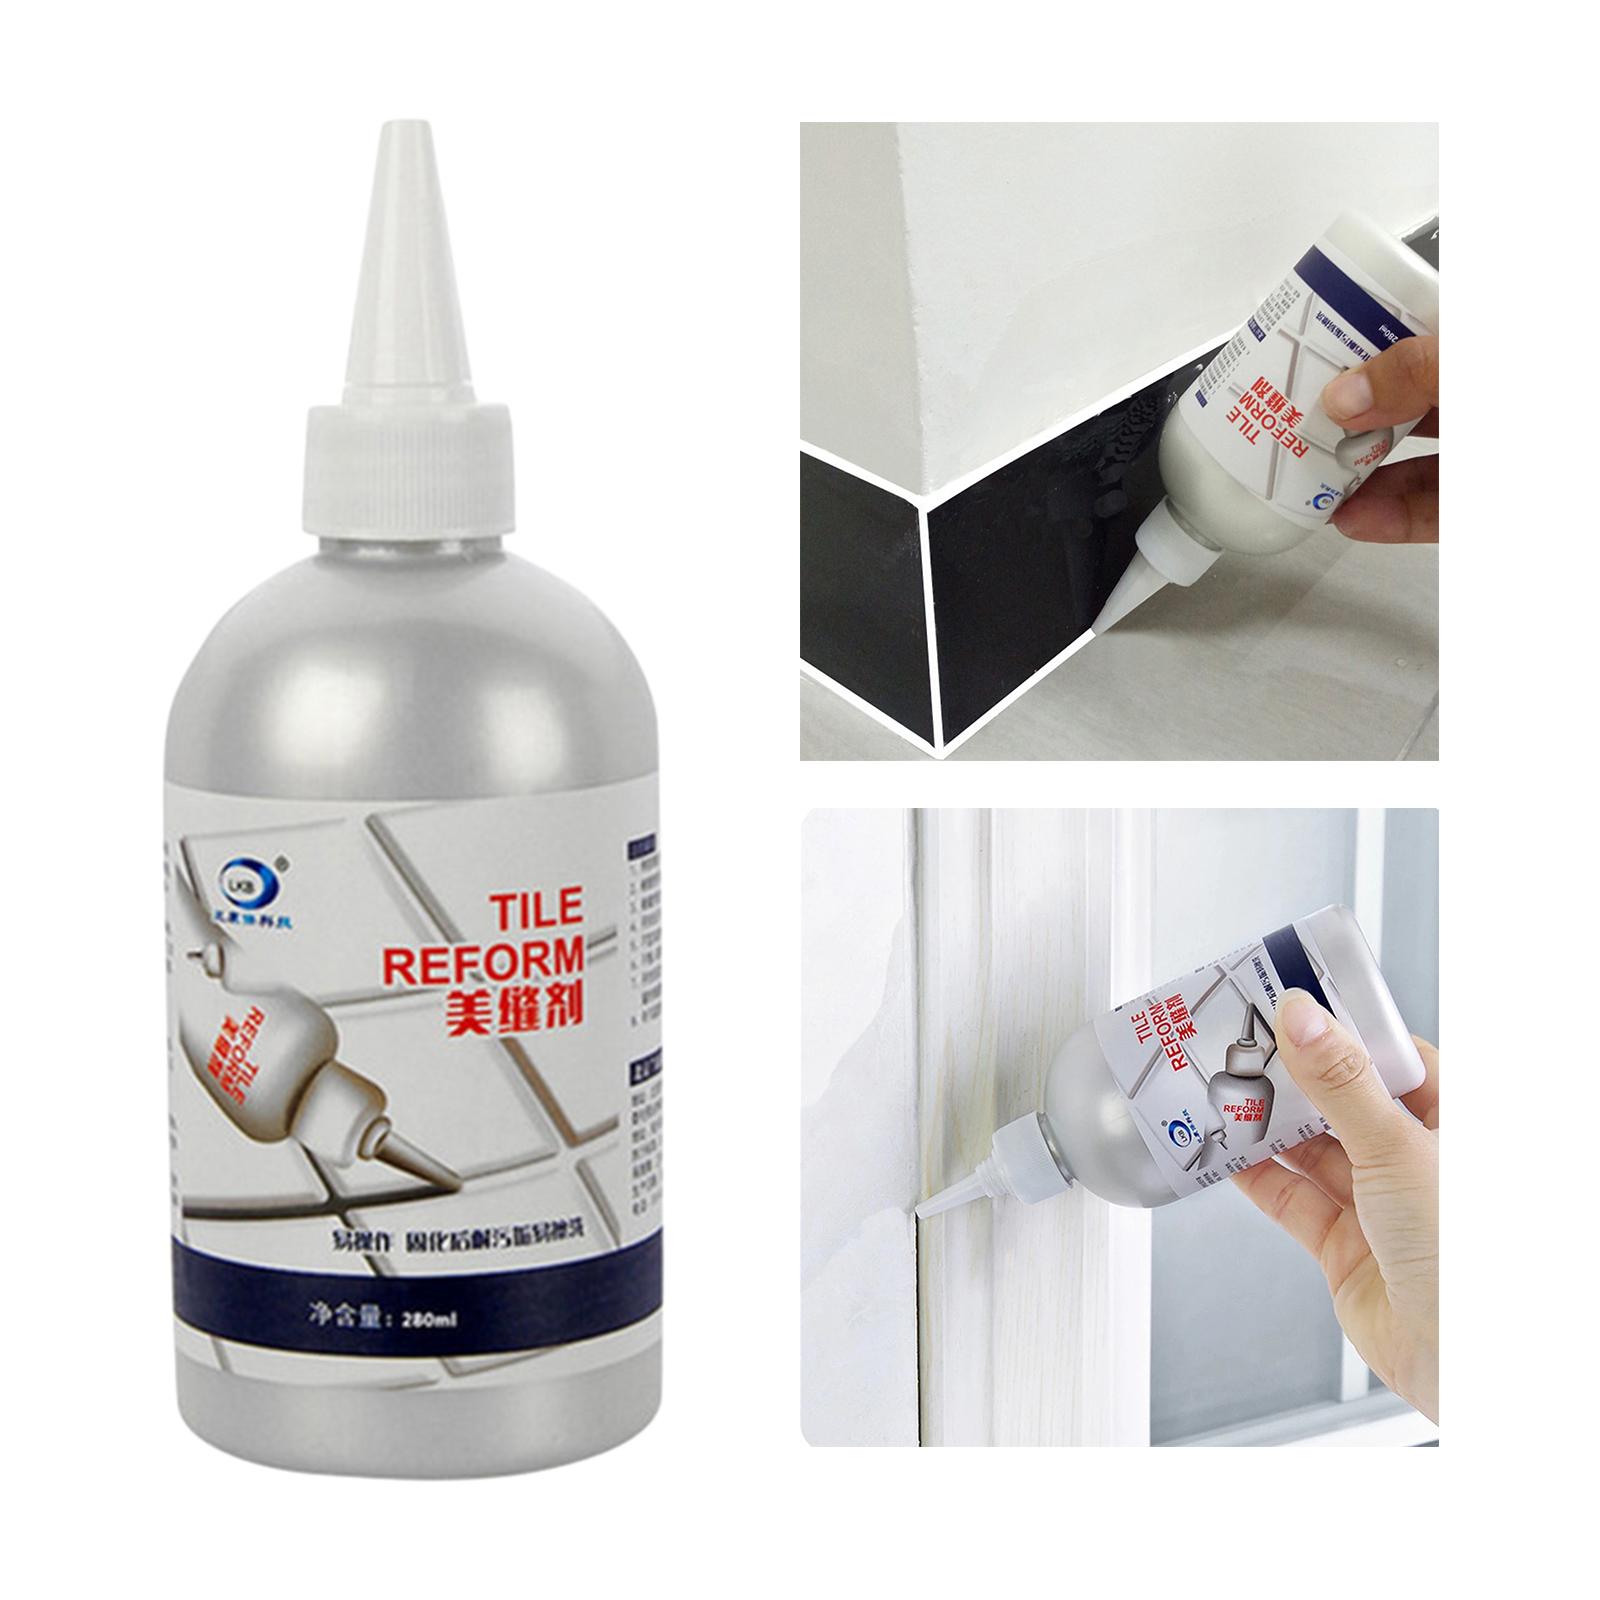 Waterproof Tile Gap Pen Tile Grout Repair Marker for Floor Kitchen Bathroom